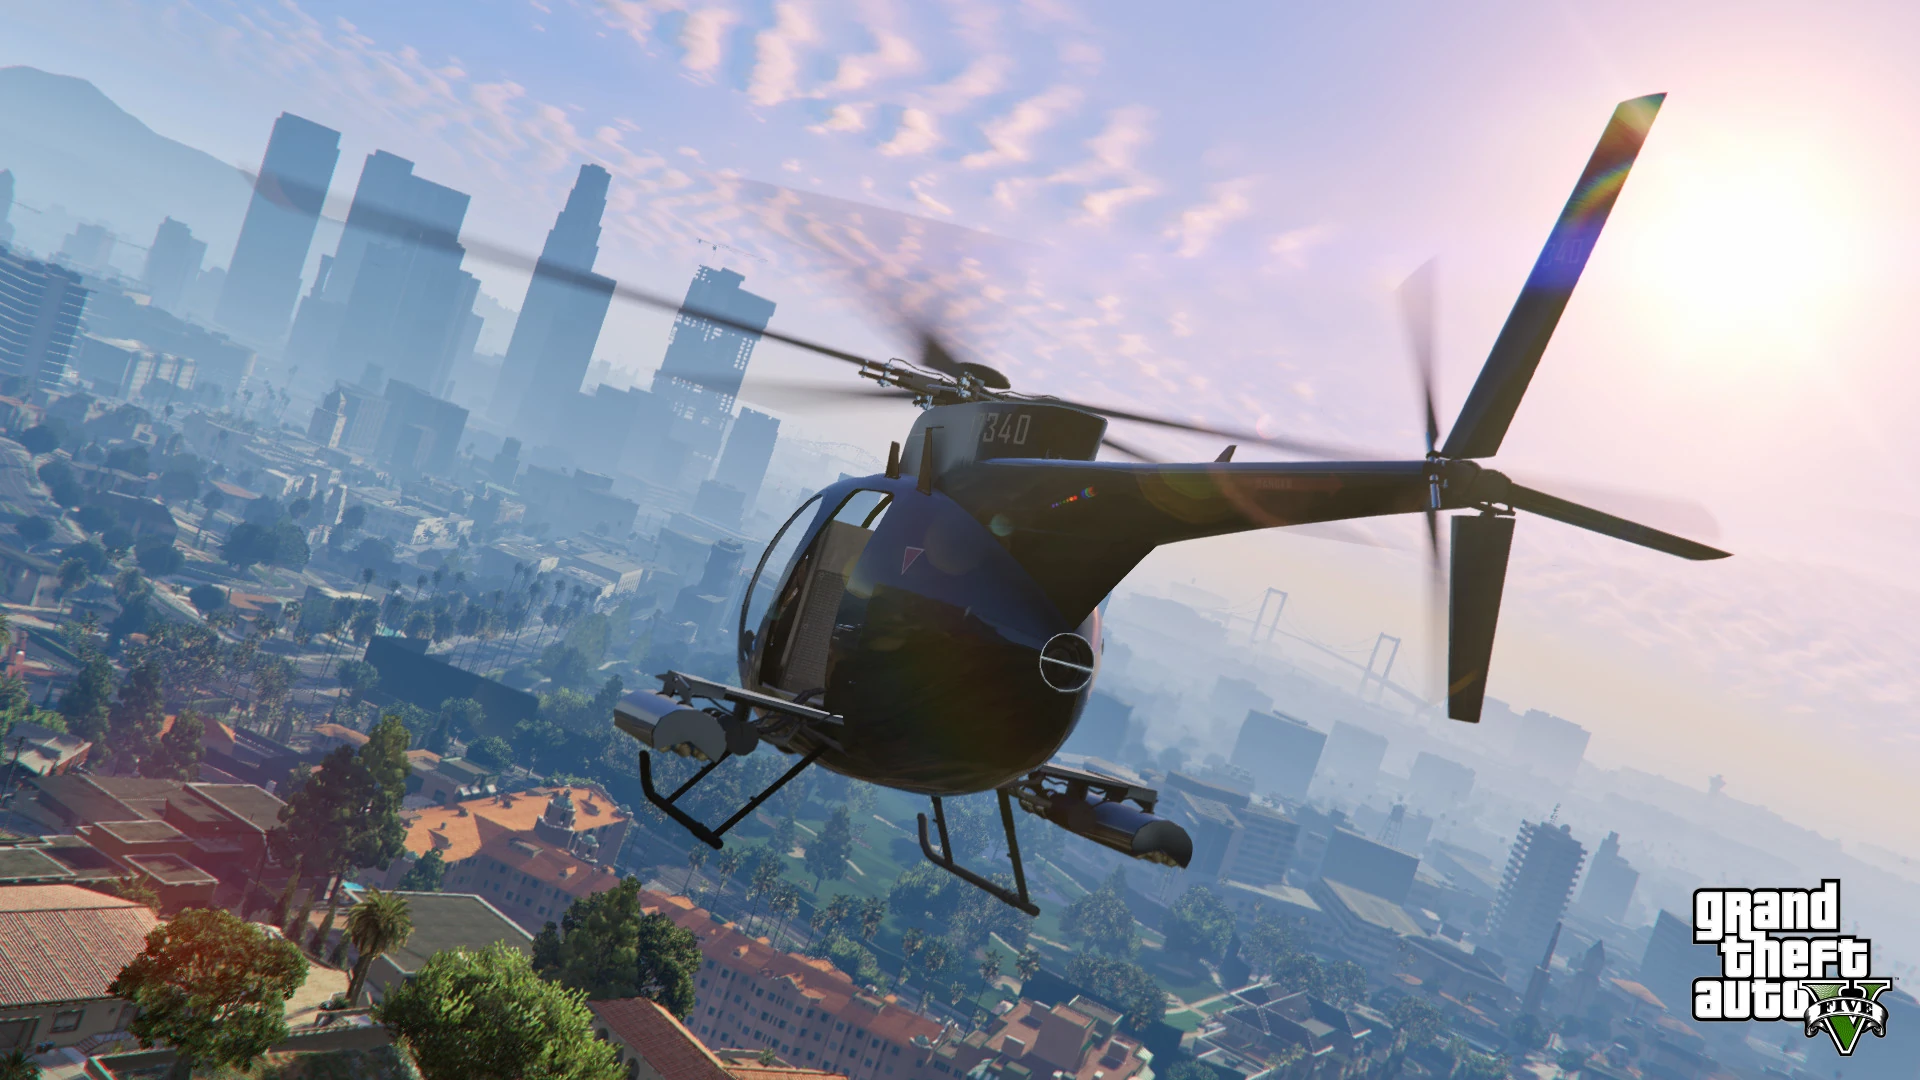 Grand Theft Auto V - PS4 Screenshot 02 - Helicóptero